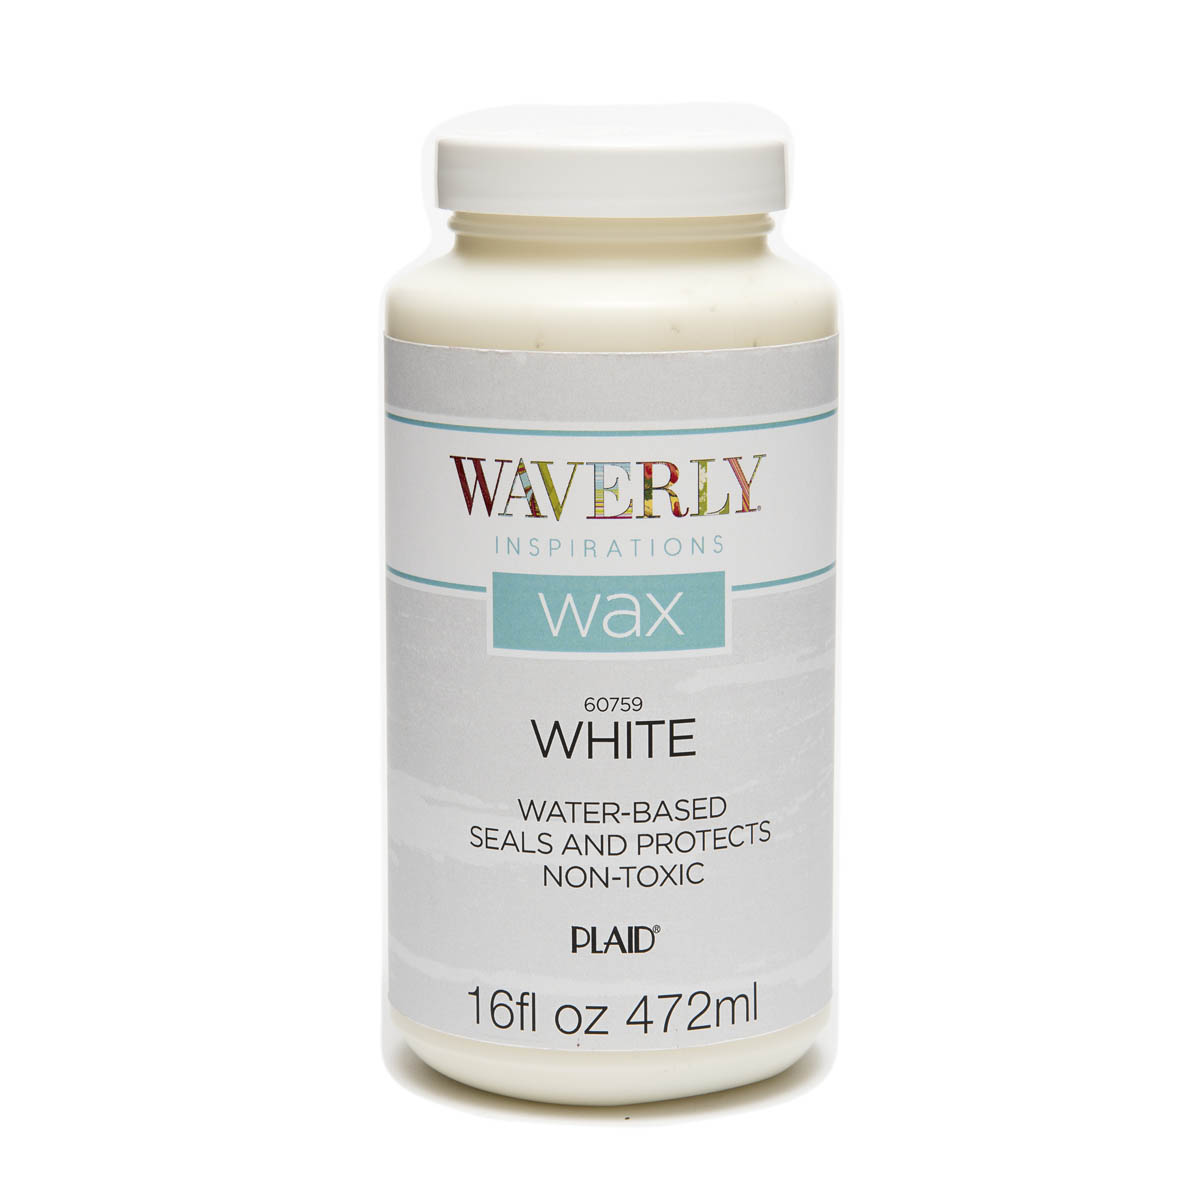 Waverly ® Inspirations Wax - White, 16 oz. - 60759E